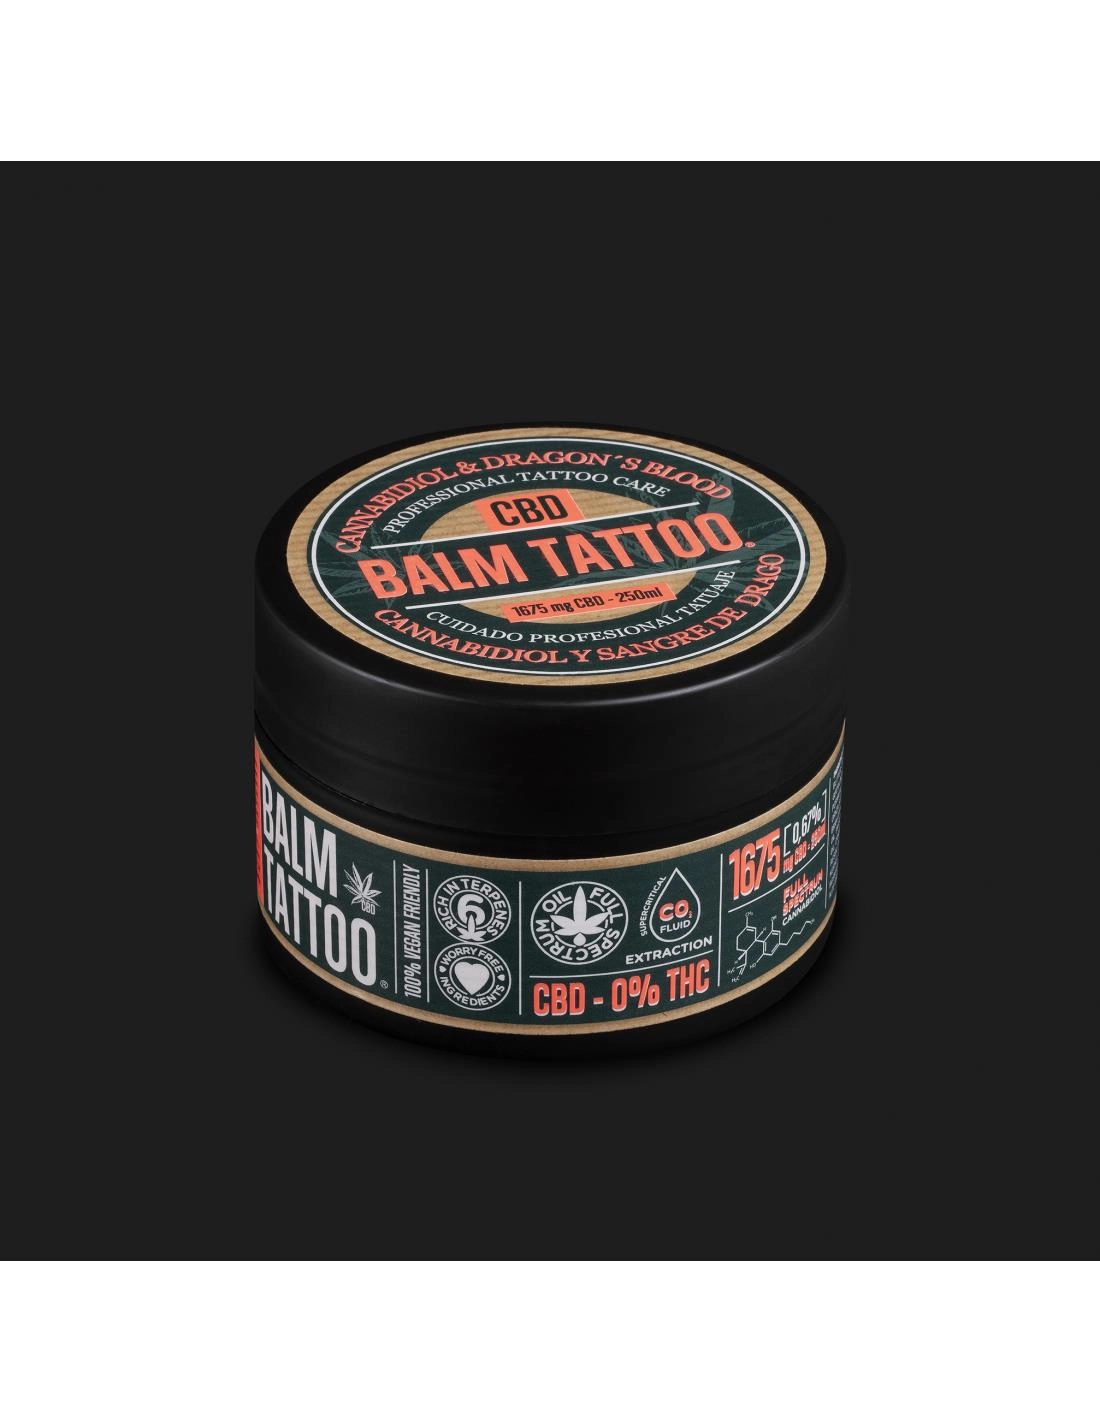 Balm Tattoo Dragon's Blood Butter 1675 mg (250 ml)